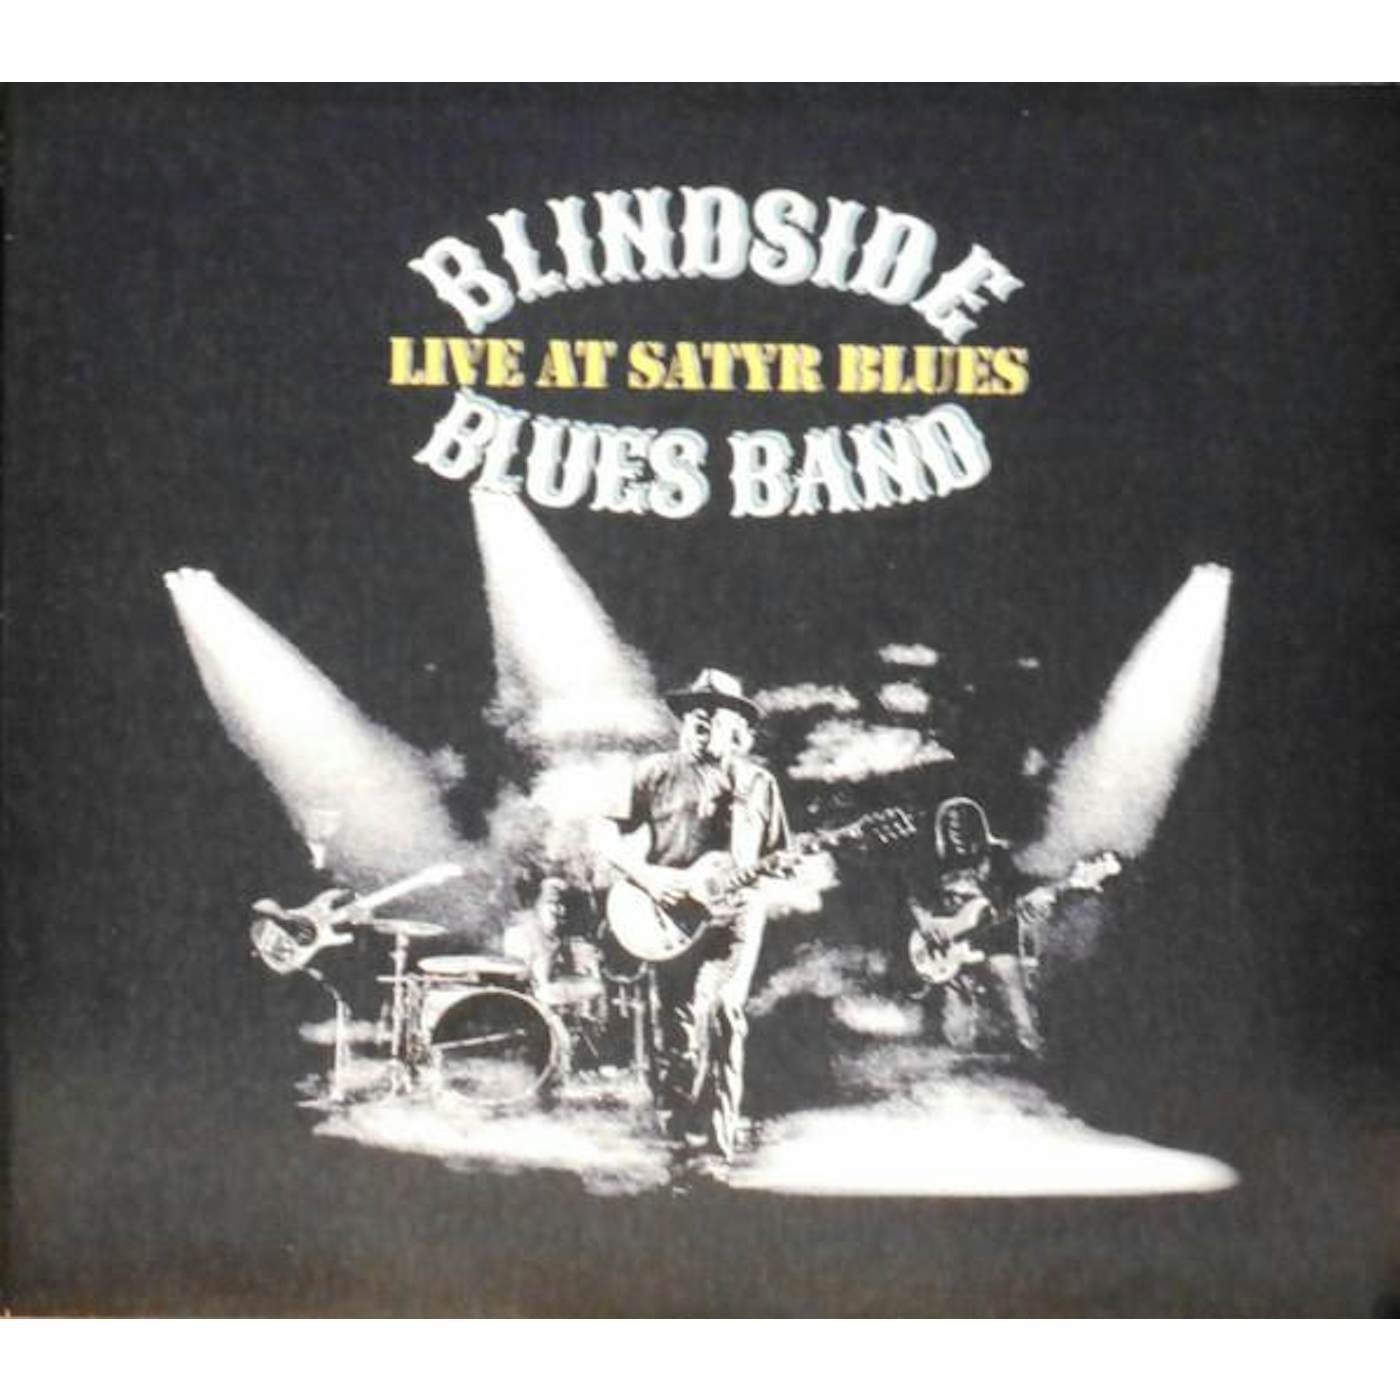 Blindside Blues Band LIVE AT SATYR BLUES CD